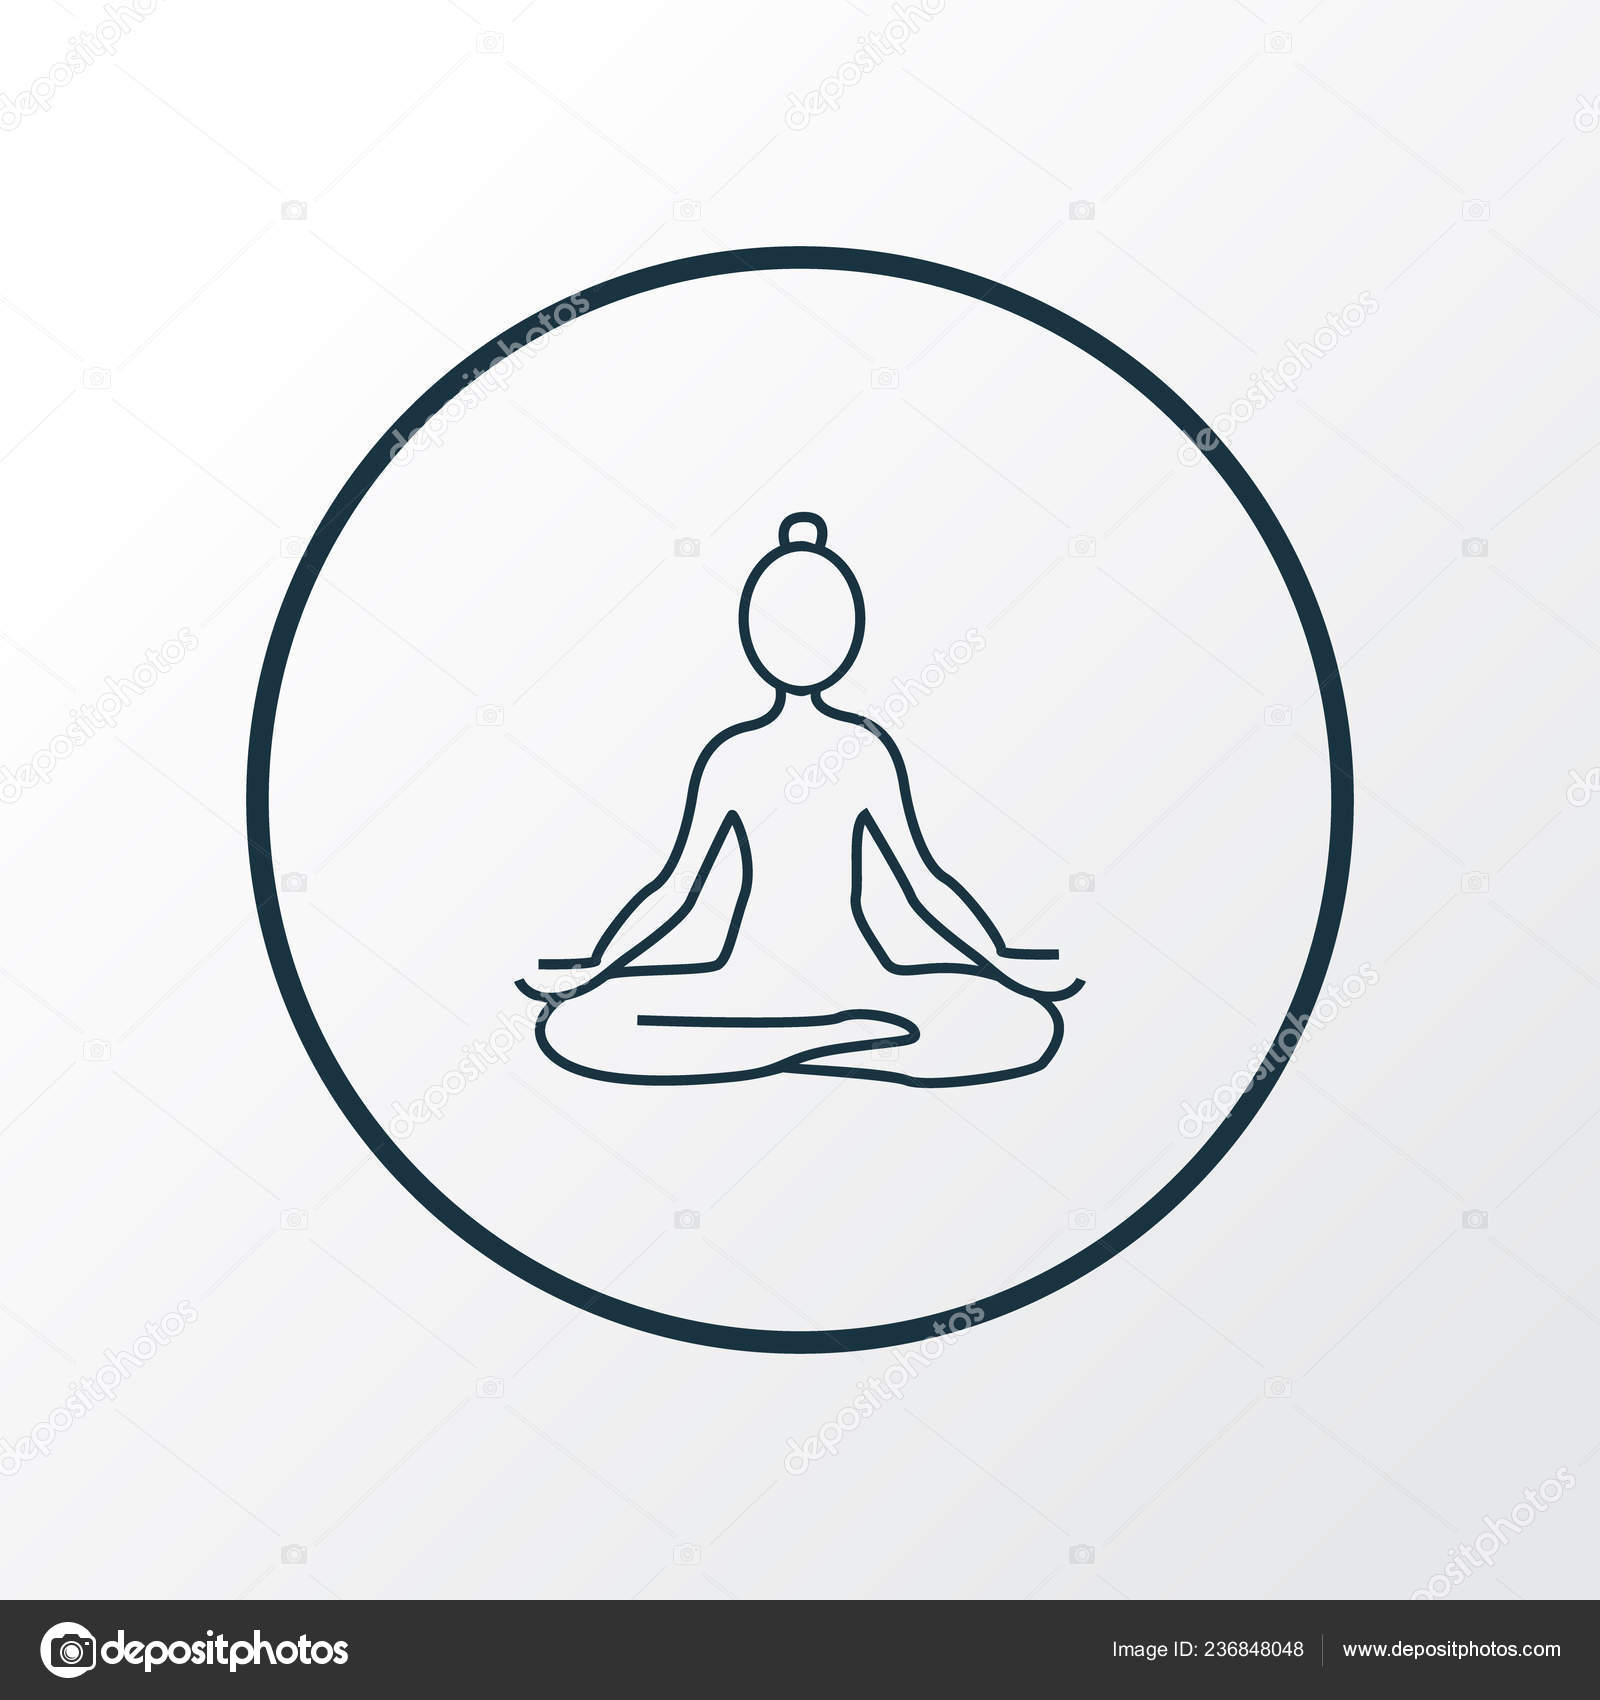 https://st4.depositphotos.com/6831718/23684/v/1600/depositphotos_236848048-stock-illustration-yoga-icon-line-symbol-premium.jpg